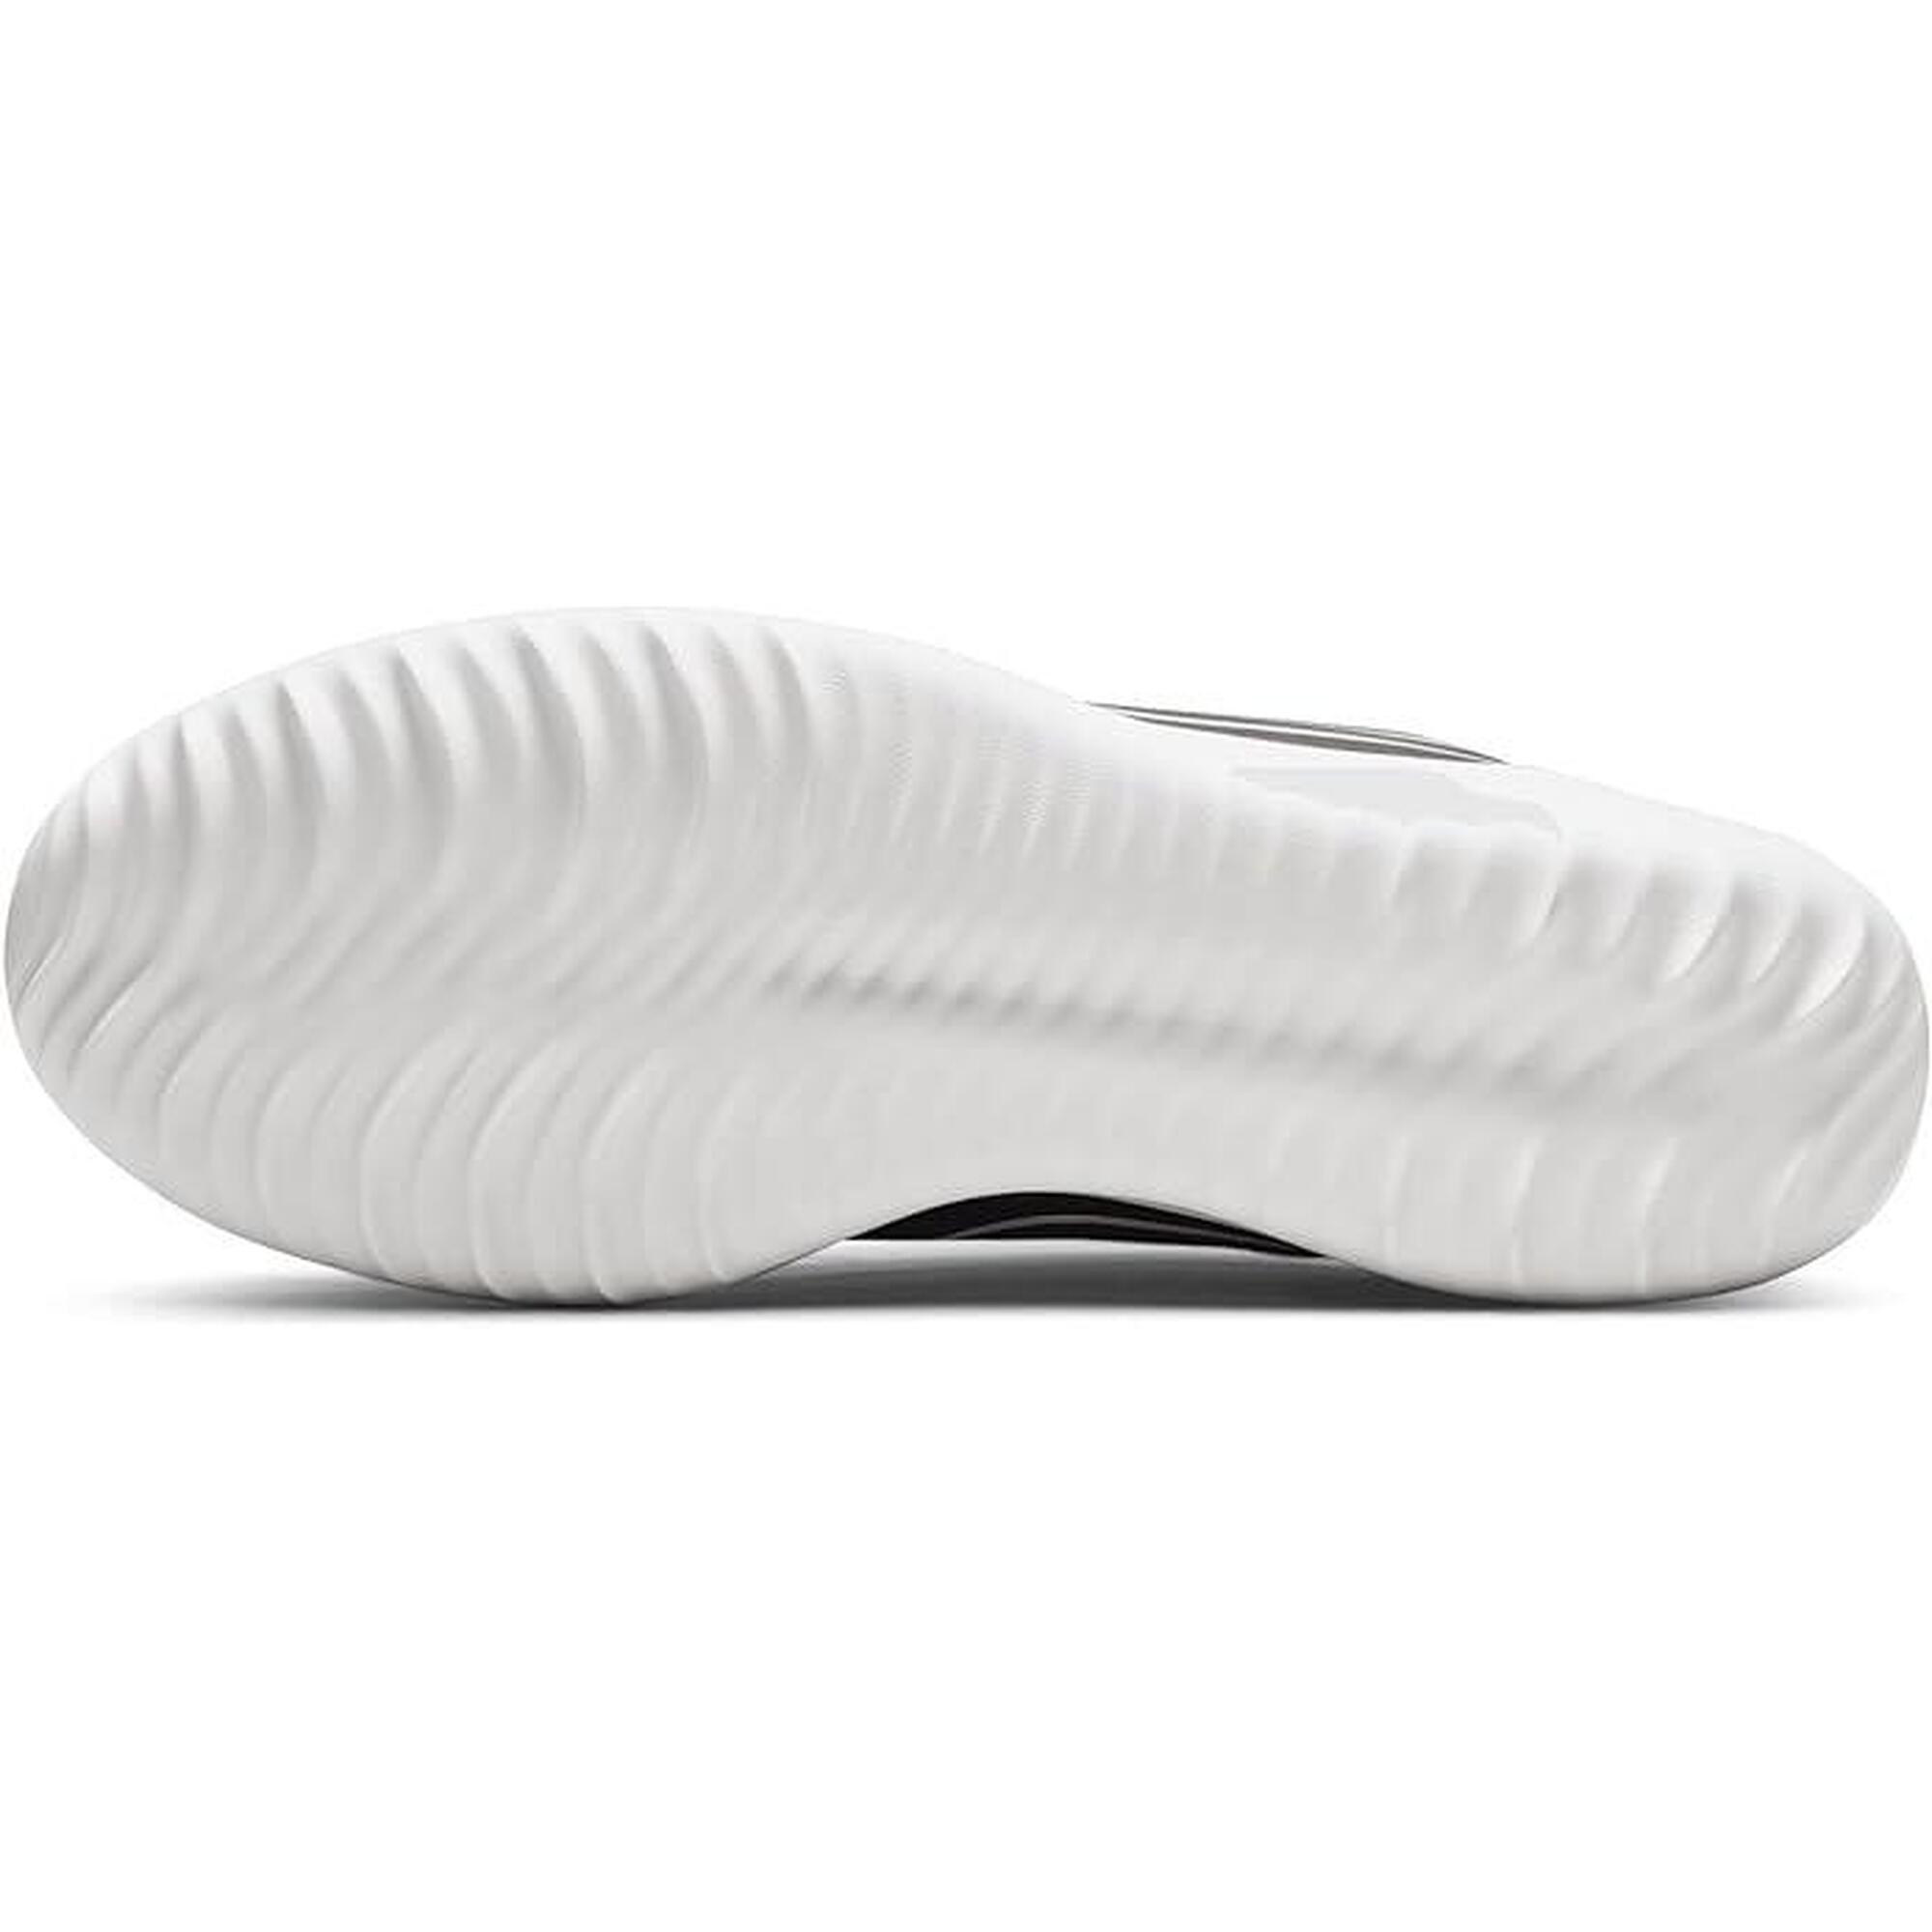 Zapatillas Nike Victory G Lite NN de Golf Unisex con Materiales sostenibles